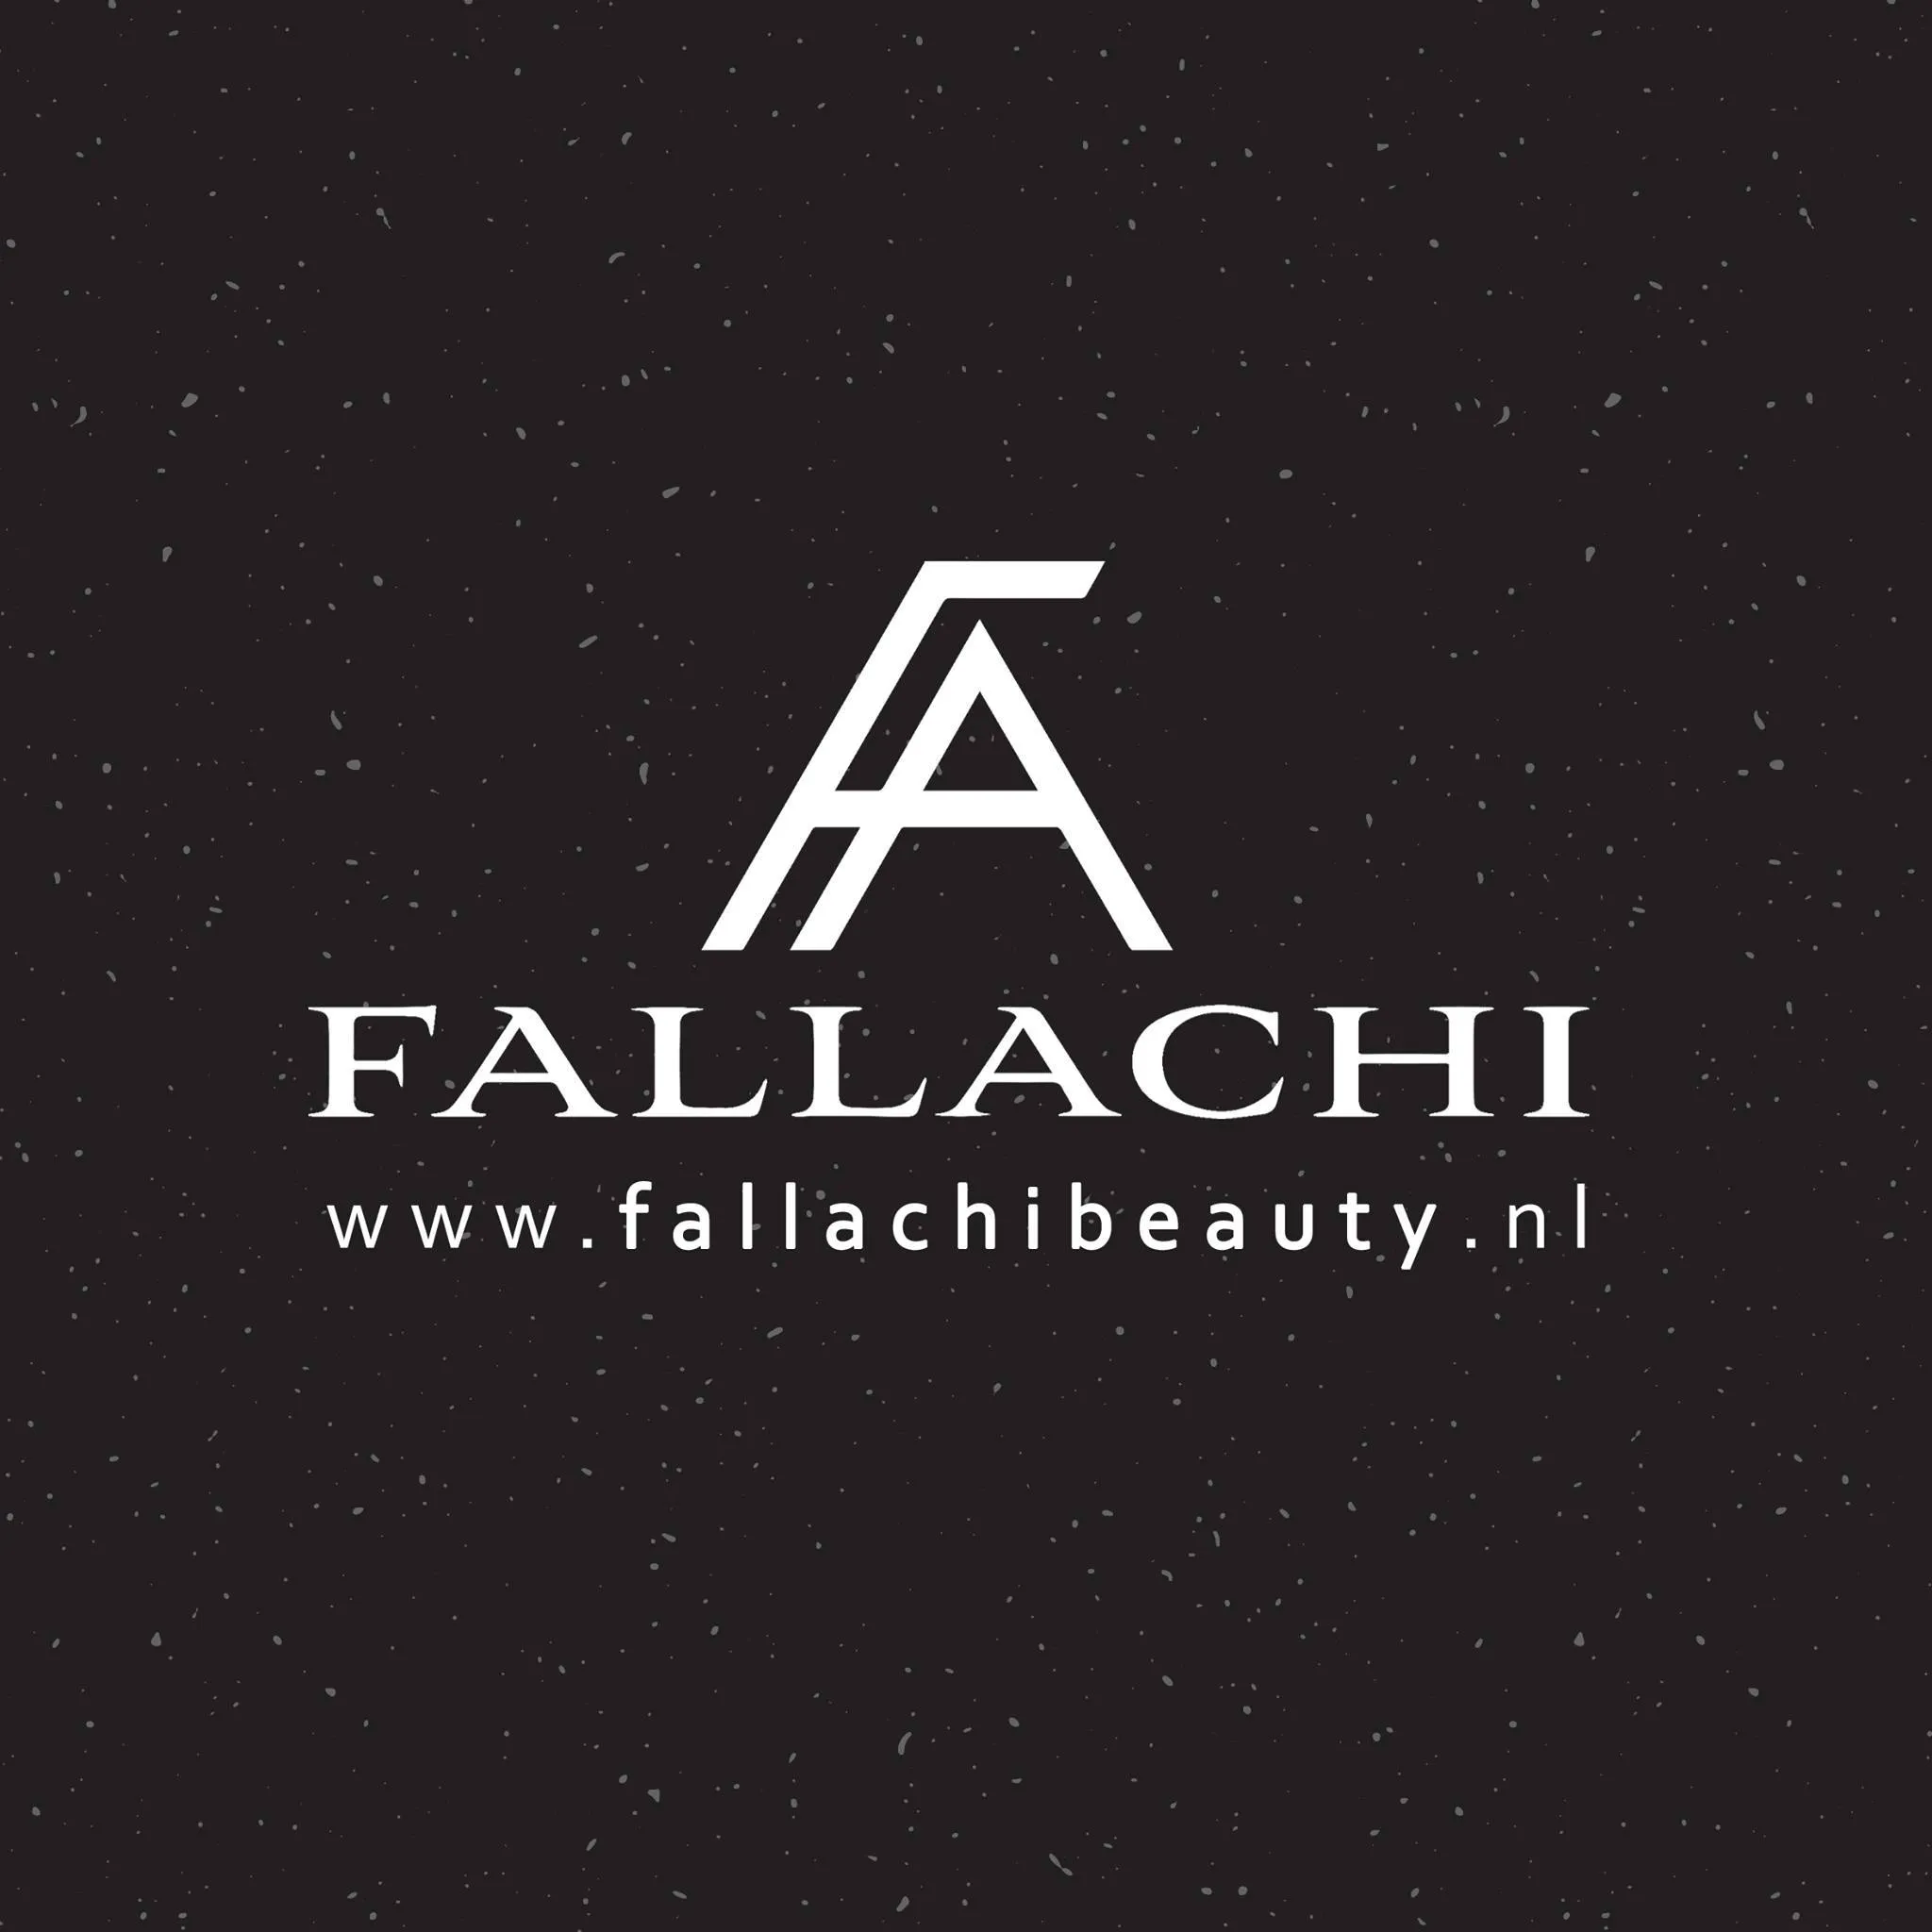 fallachibeauty.nl